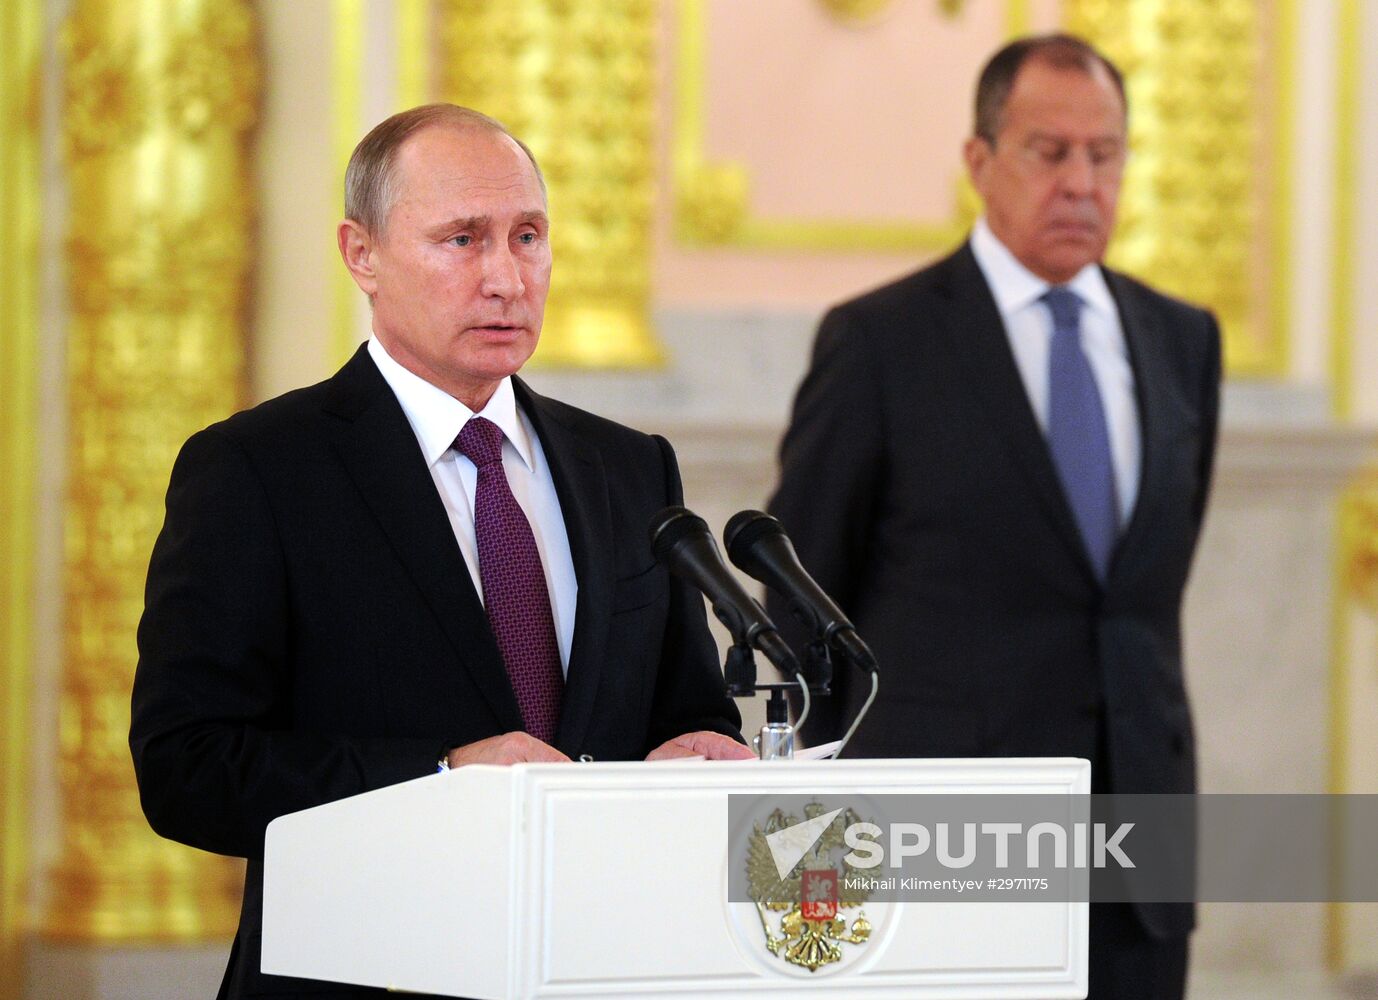 President Vladimir Putin receives credentials from foreign ambassadors